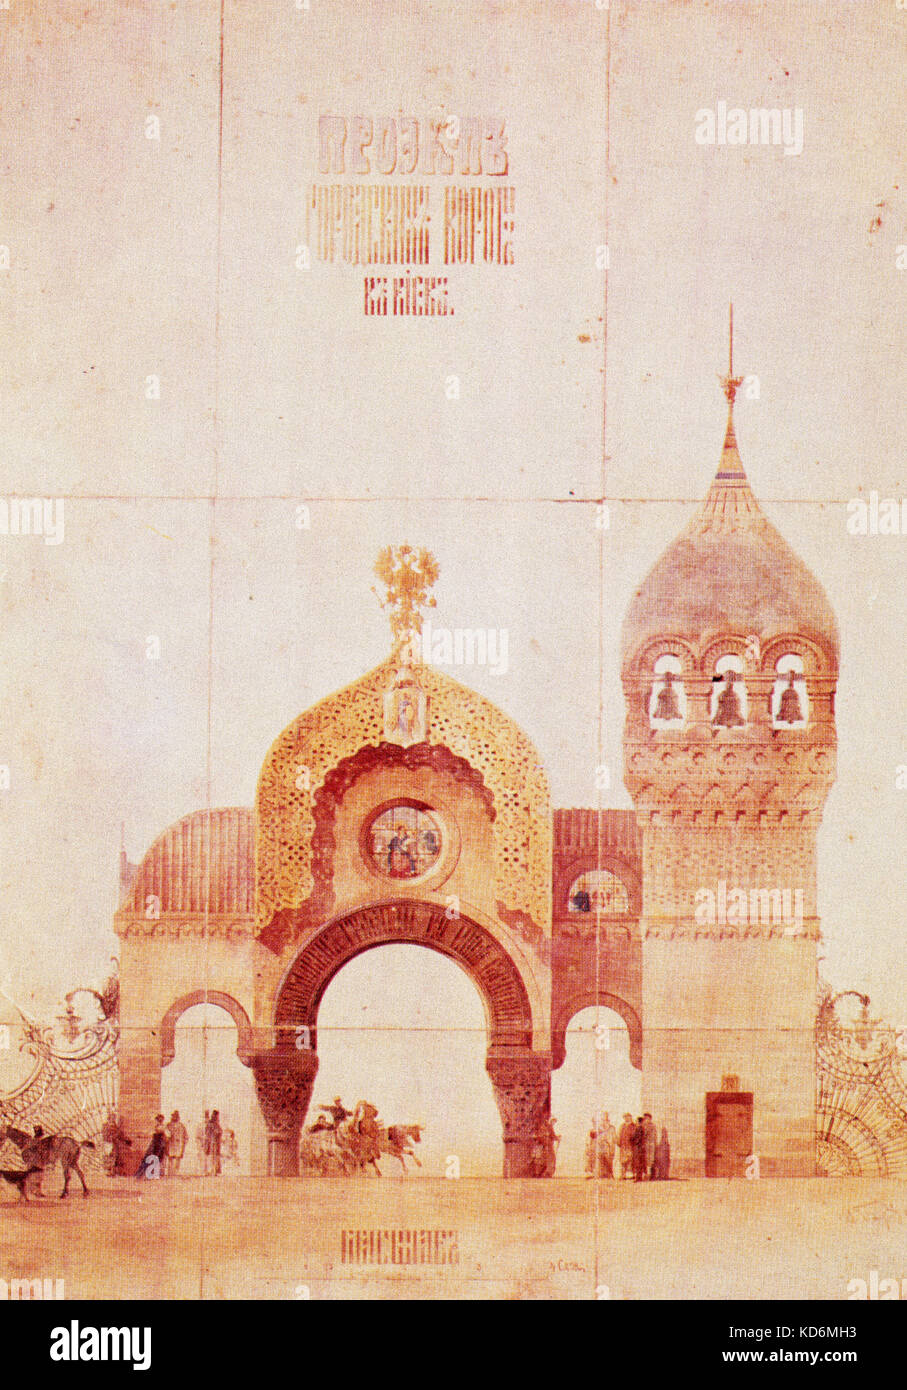 Victor Hartmann 's design of the new city gate for Kiev- part of  Mussorgsky's piano suite Pictures at an Exhibition. Finale was entitled La Grande  Porte de Kiev. Memorial exhibition by M's